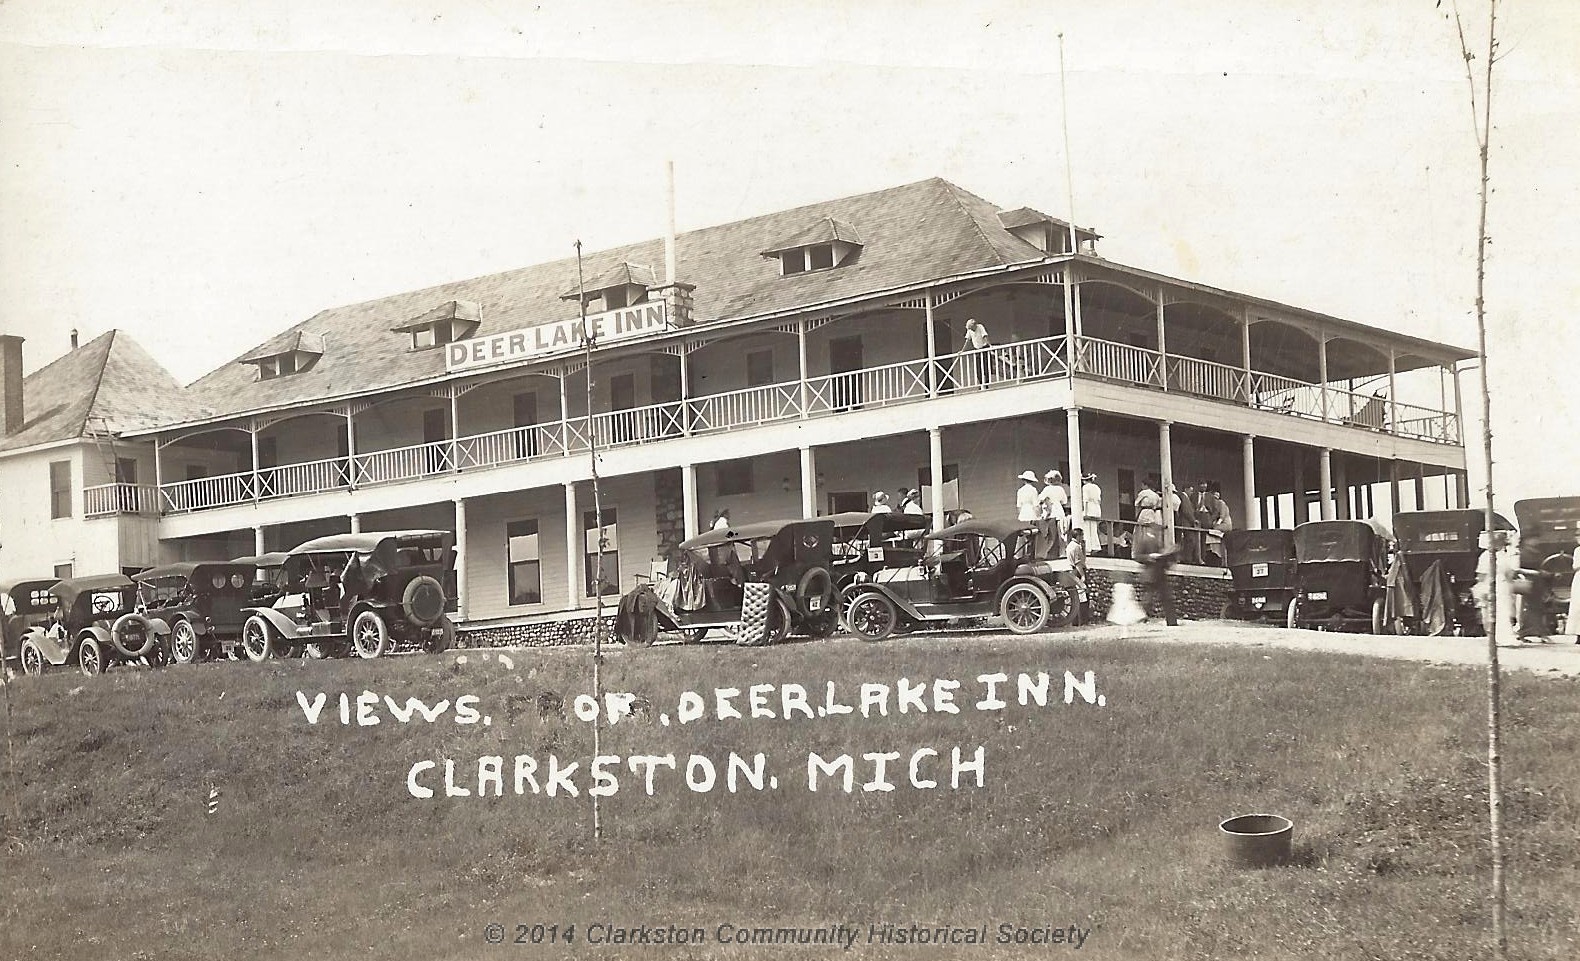 Deer Lake Inn, c. 1920